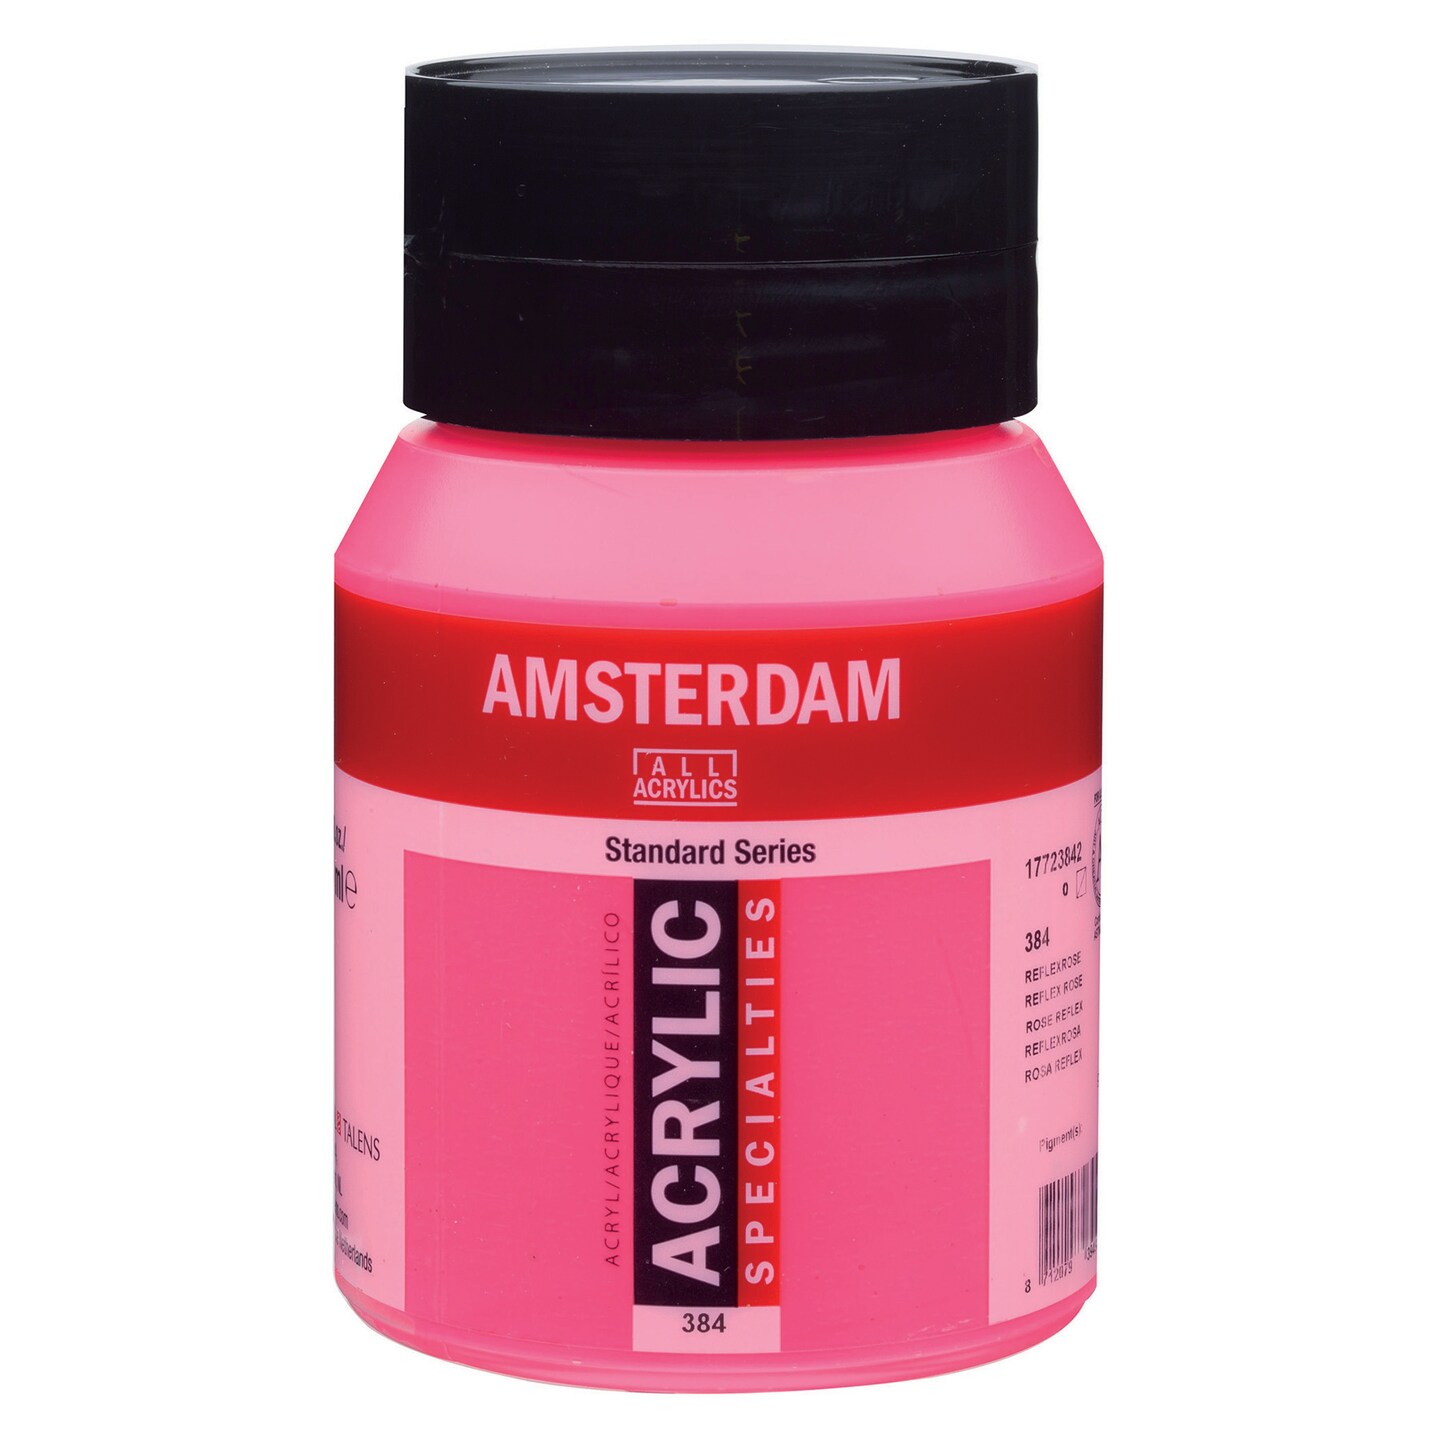 Amsterdam Standard Series Acrylic Paint, 500ml, Reflex Rose